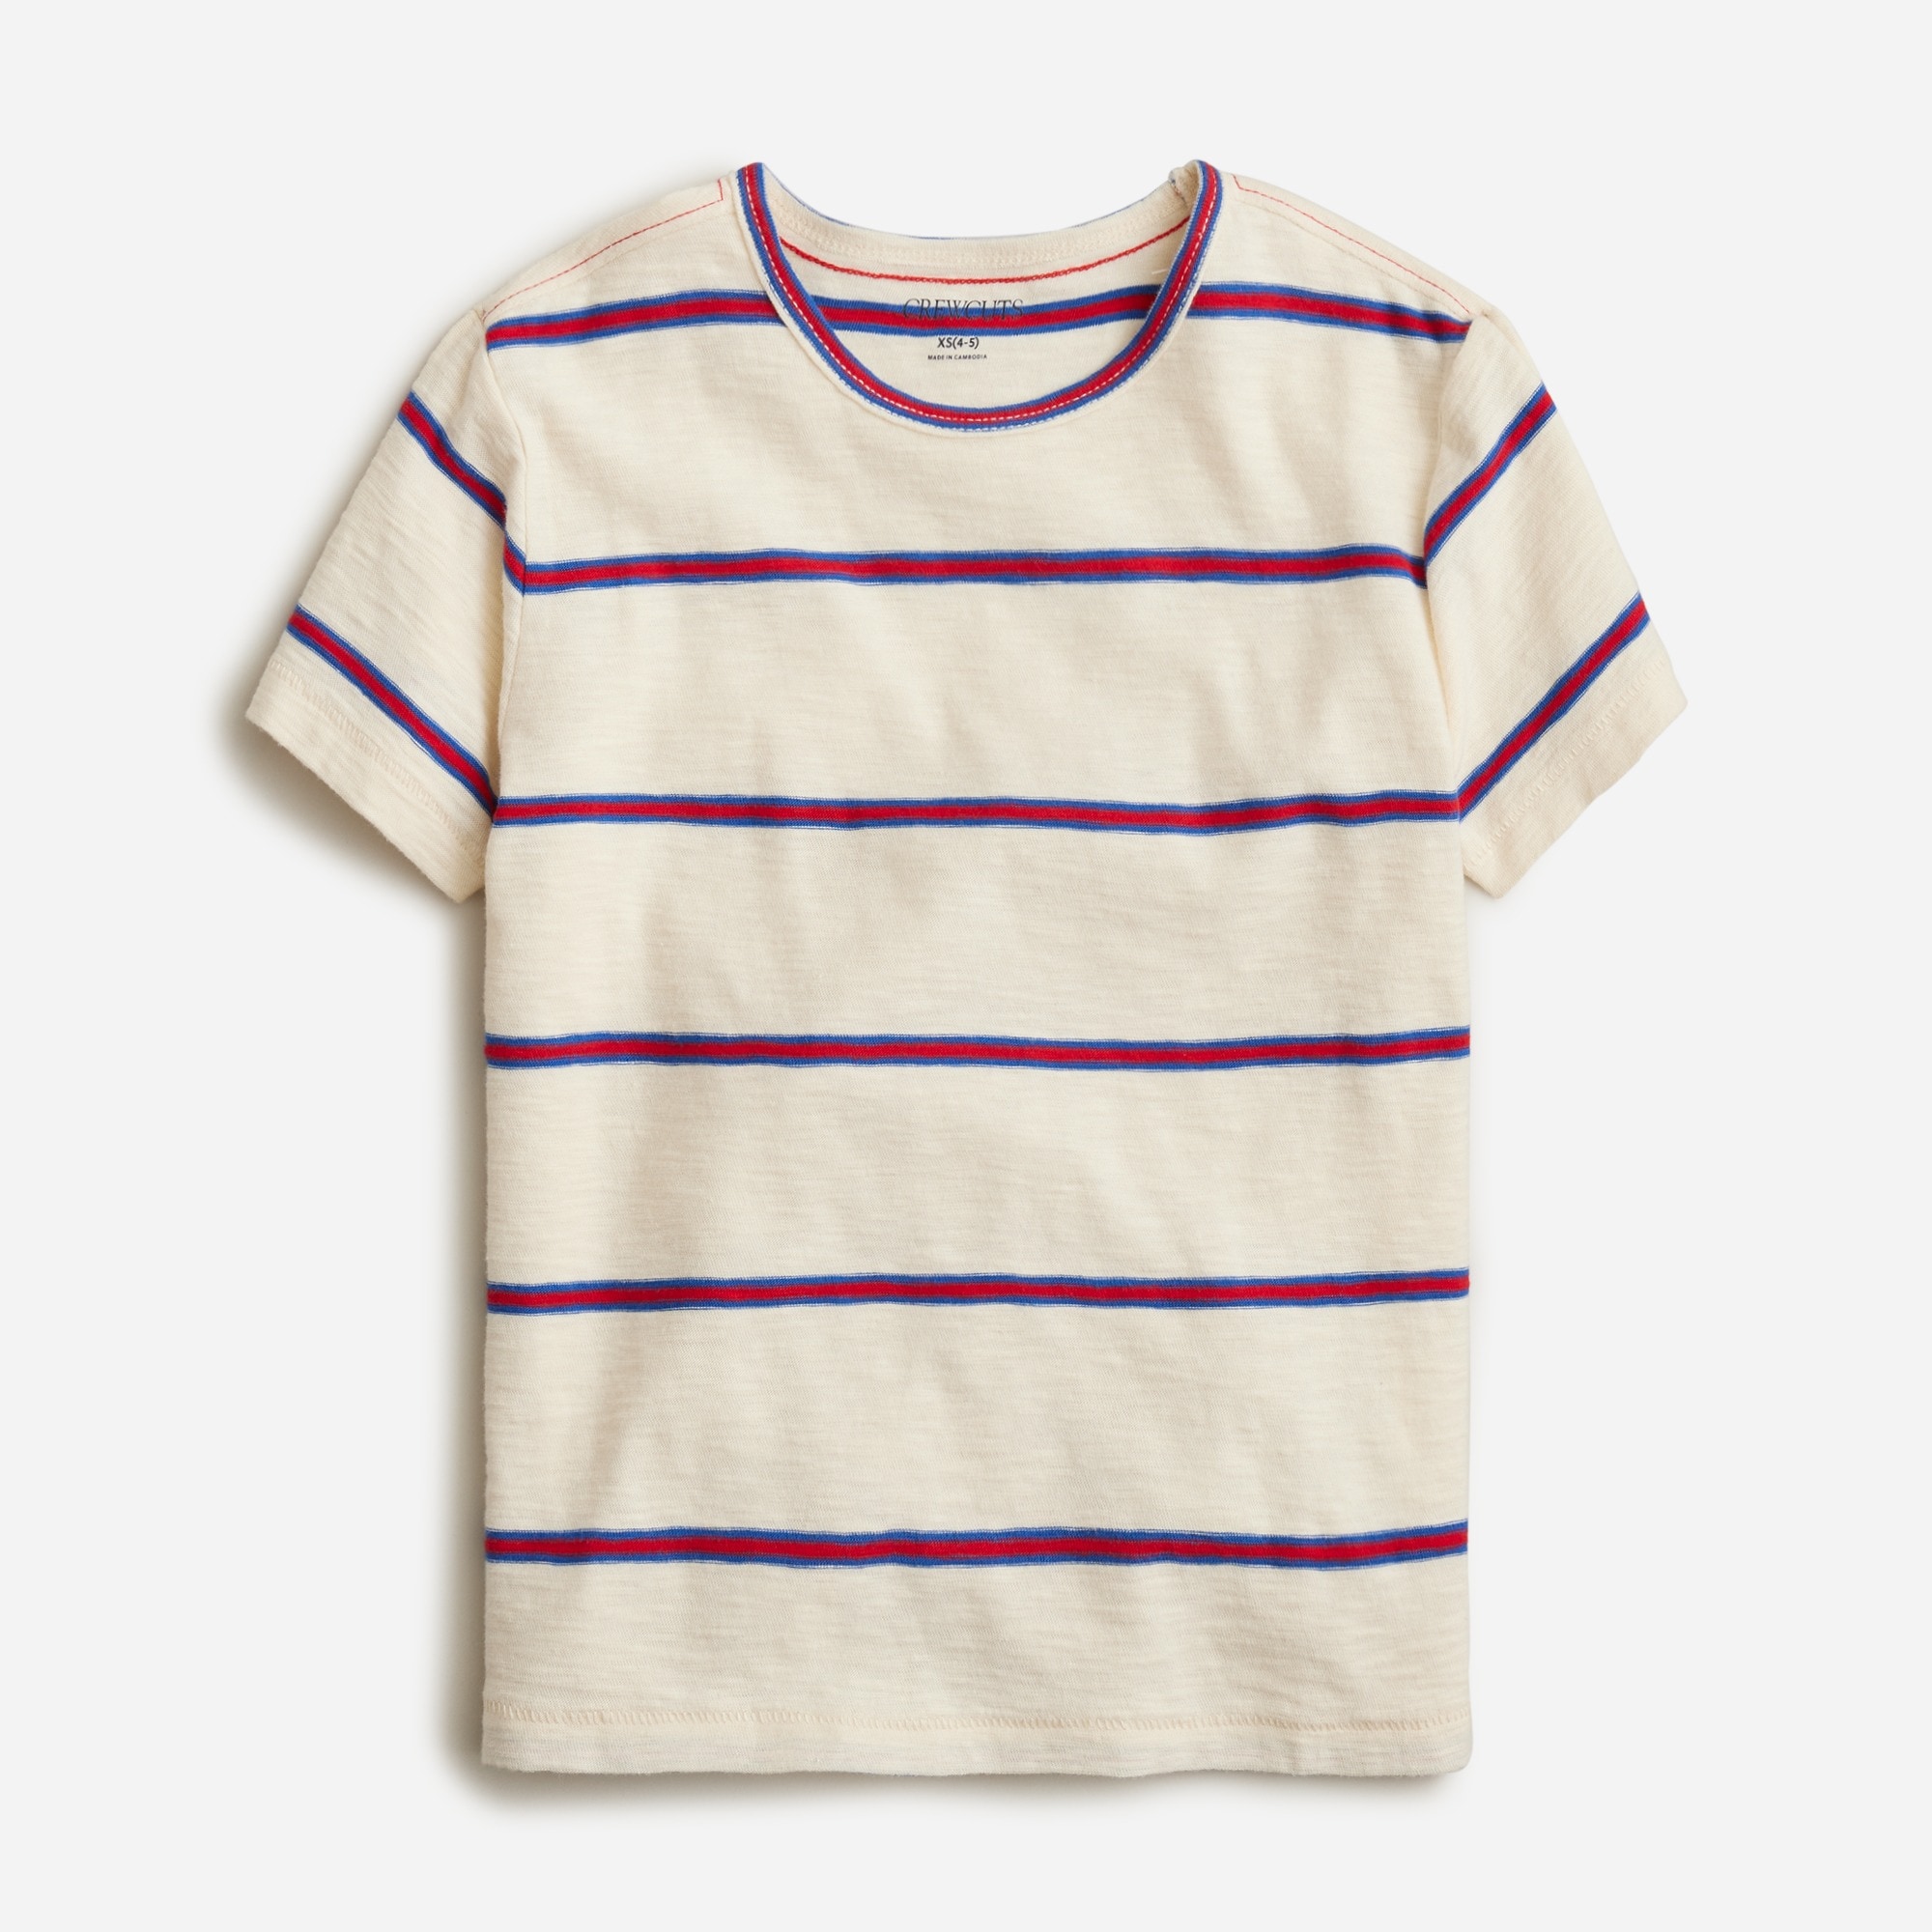  Kids' short-sleeve T-shirt in stripe